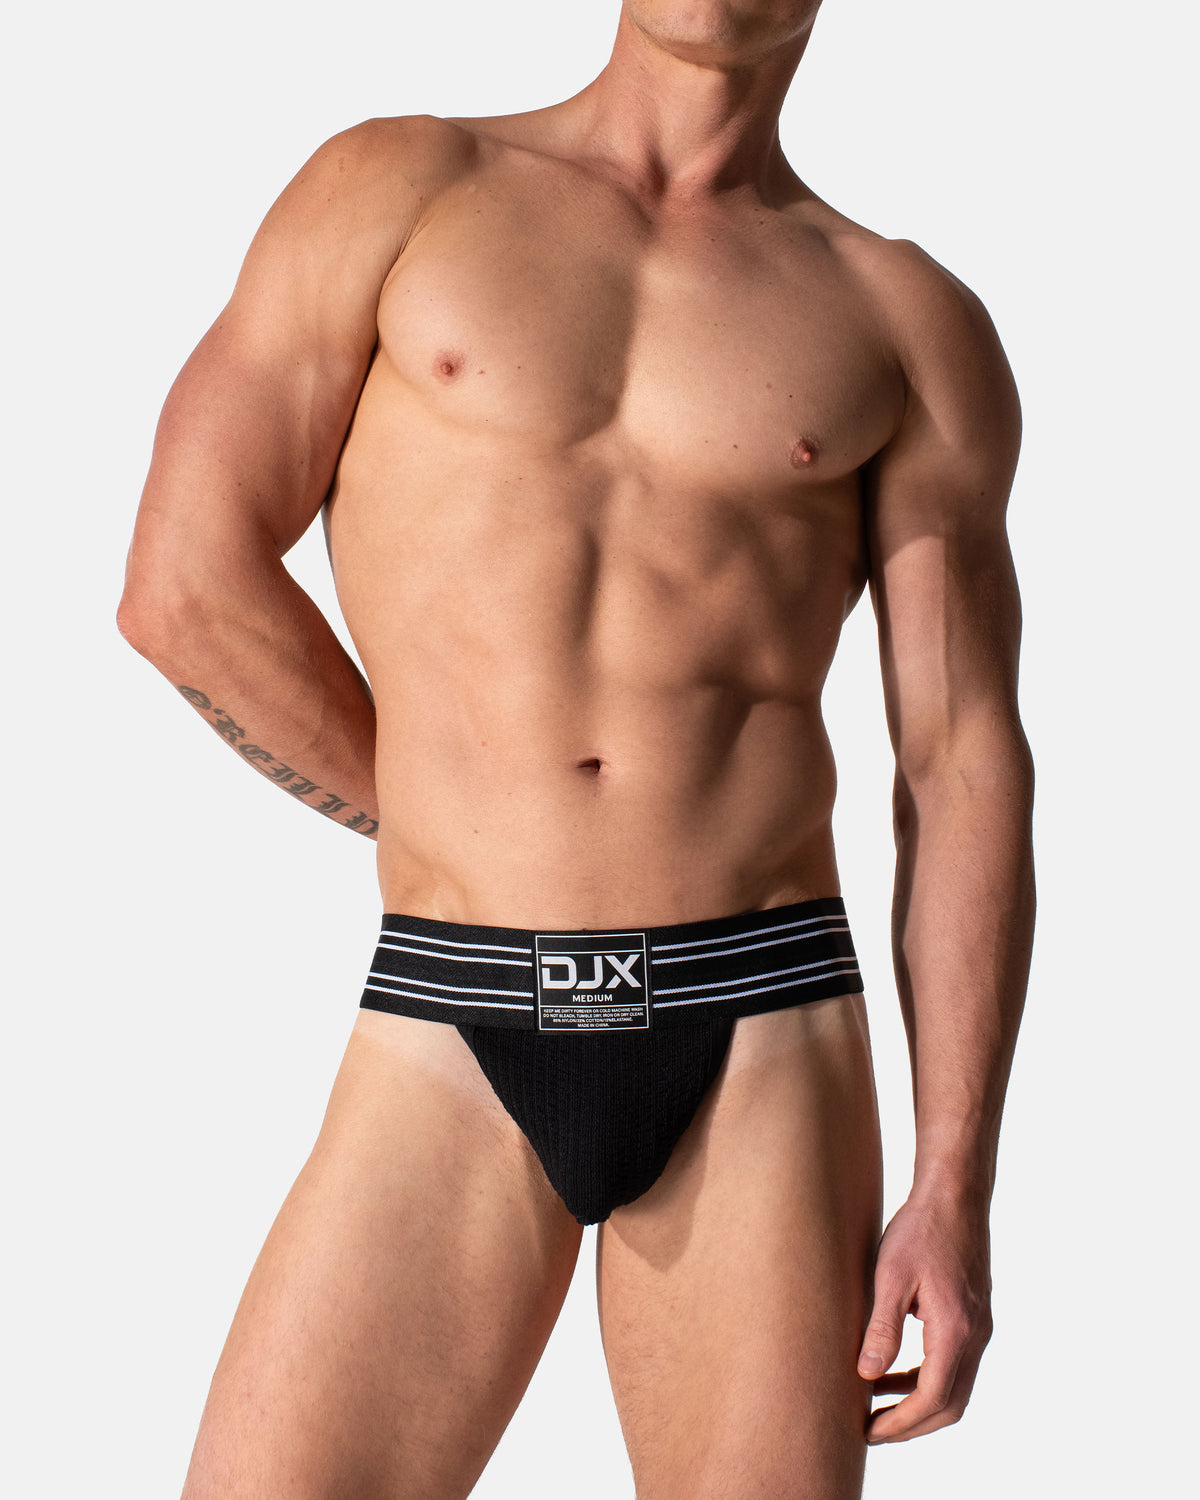 Men's Underwear Thongs, Online Australia